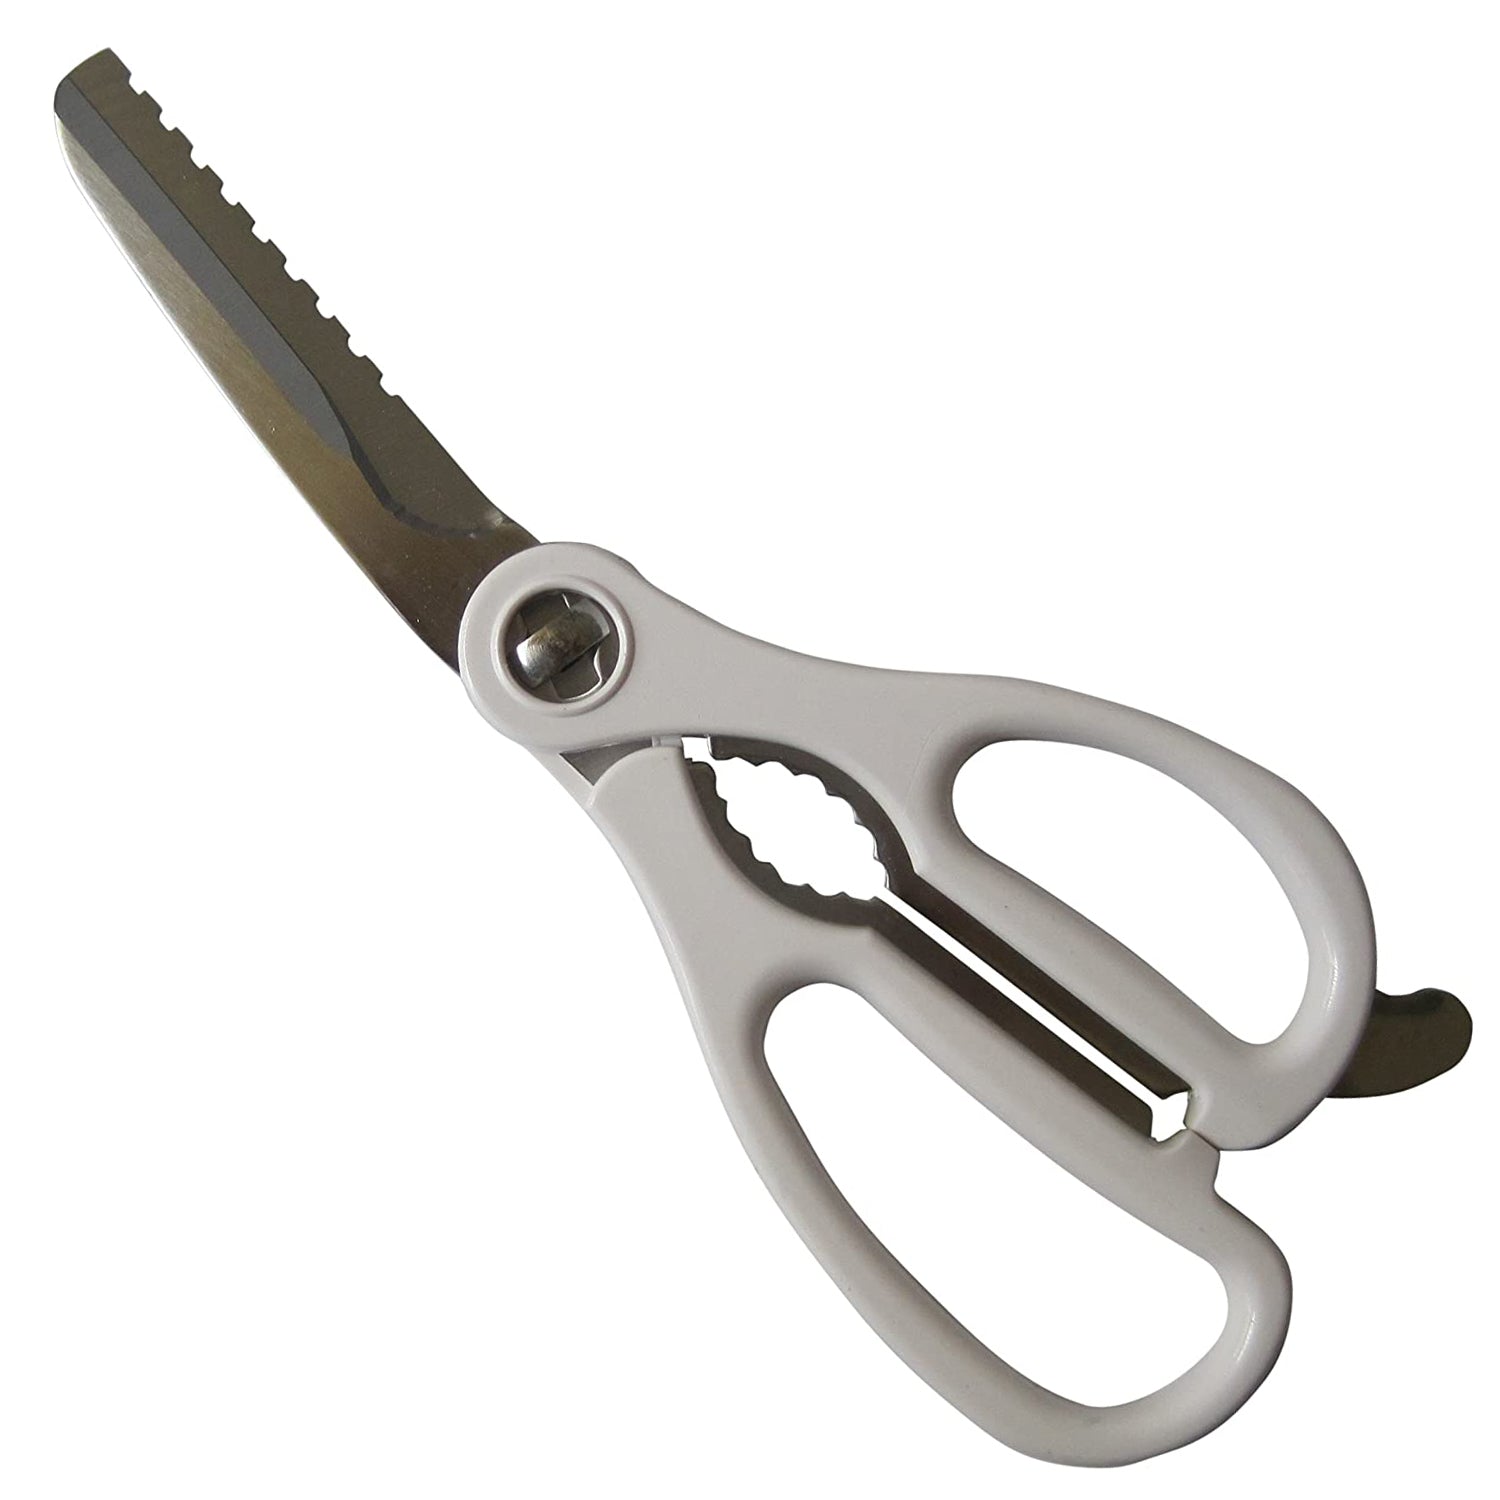 Premium Shimomura Stainless Steel Kitchen Scissors - Durable and Convenient